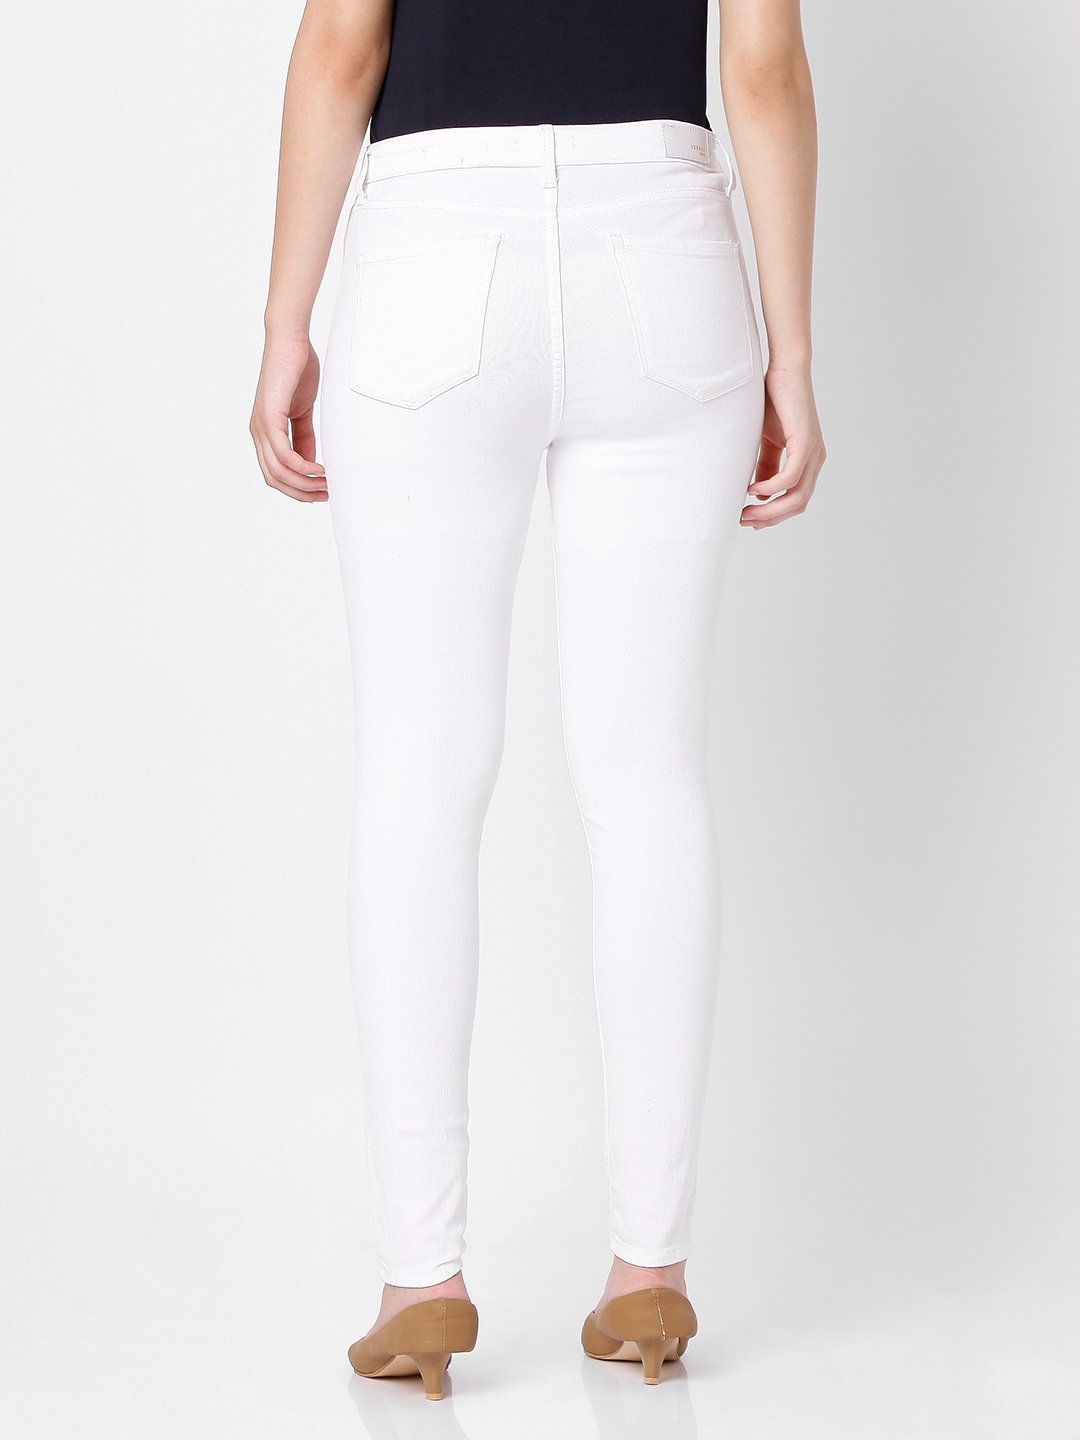 spykar | Women's White Cotton Solid Skinny Jeans 3